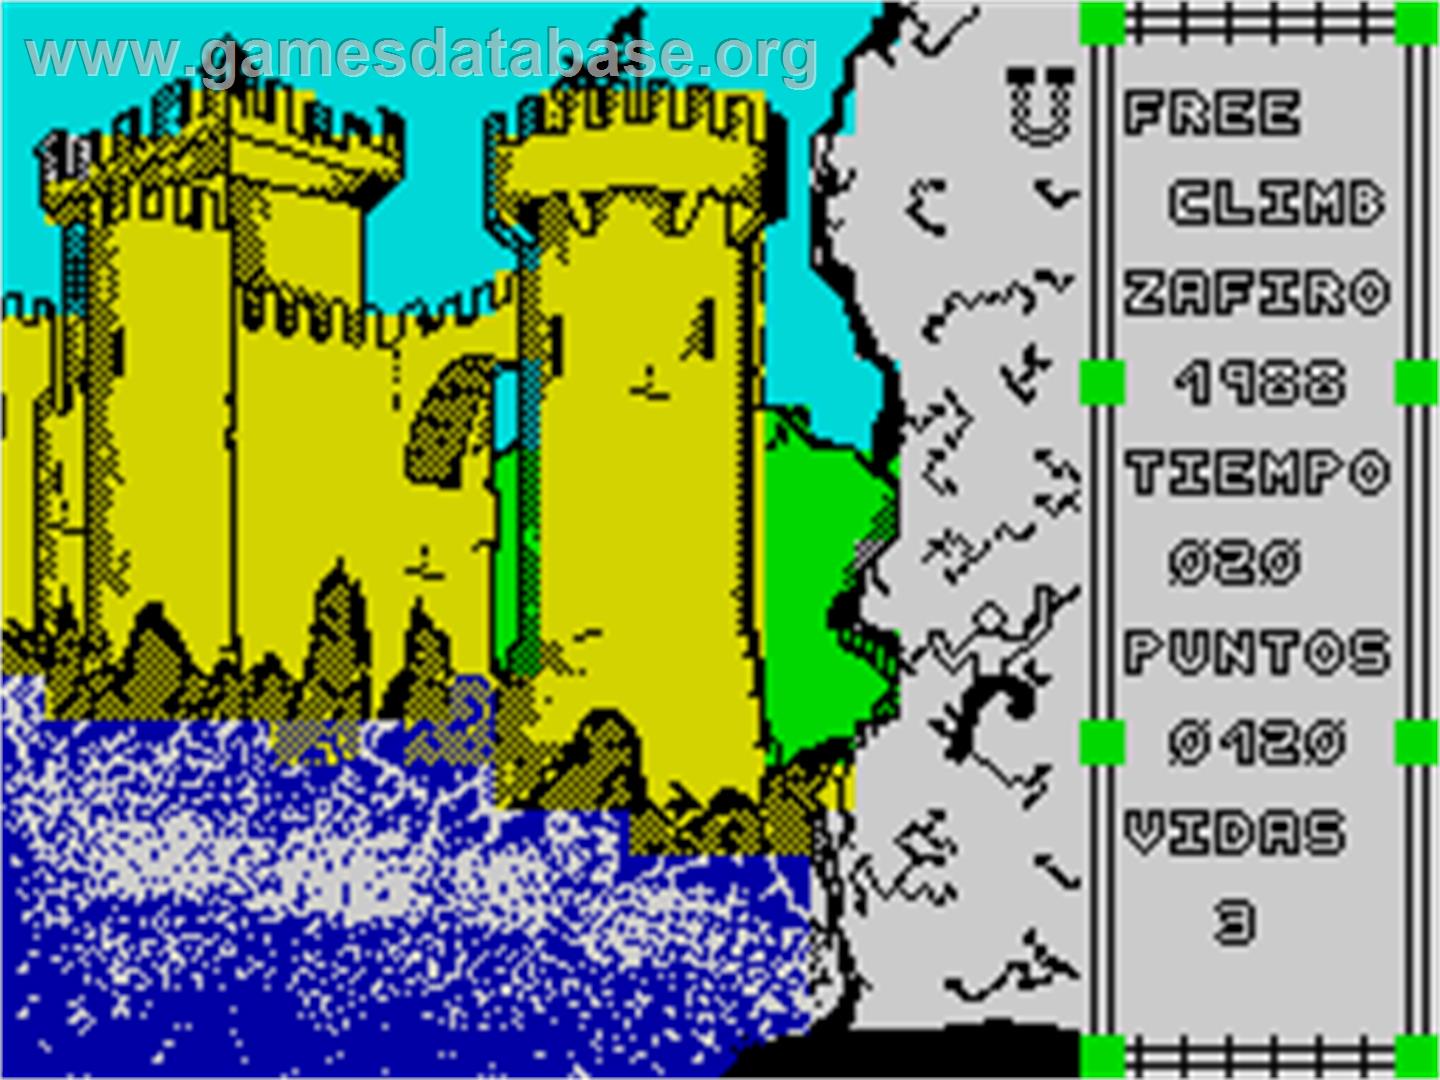 Free Climbing - Sinclair ZX Spectrum - Artwork - In Game